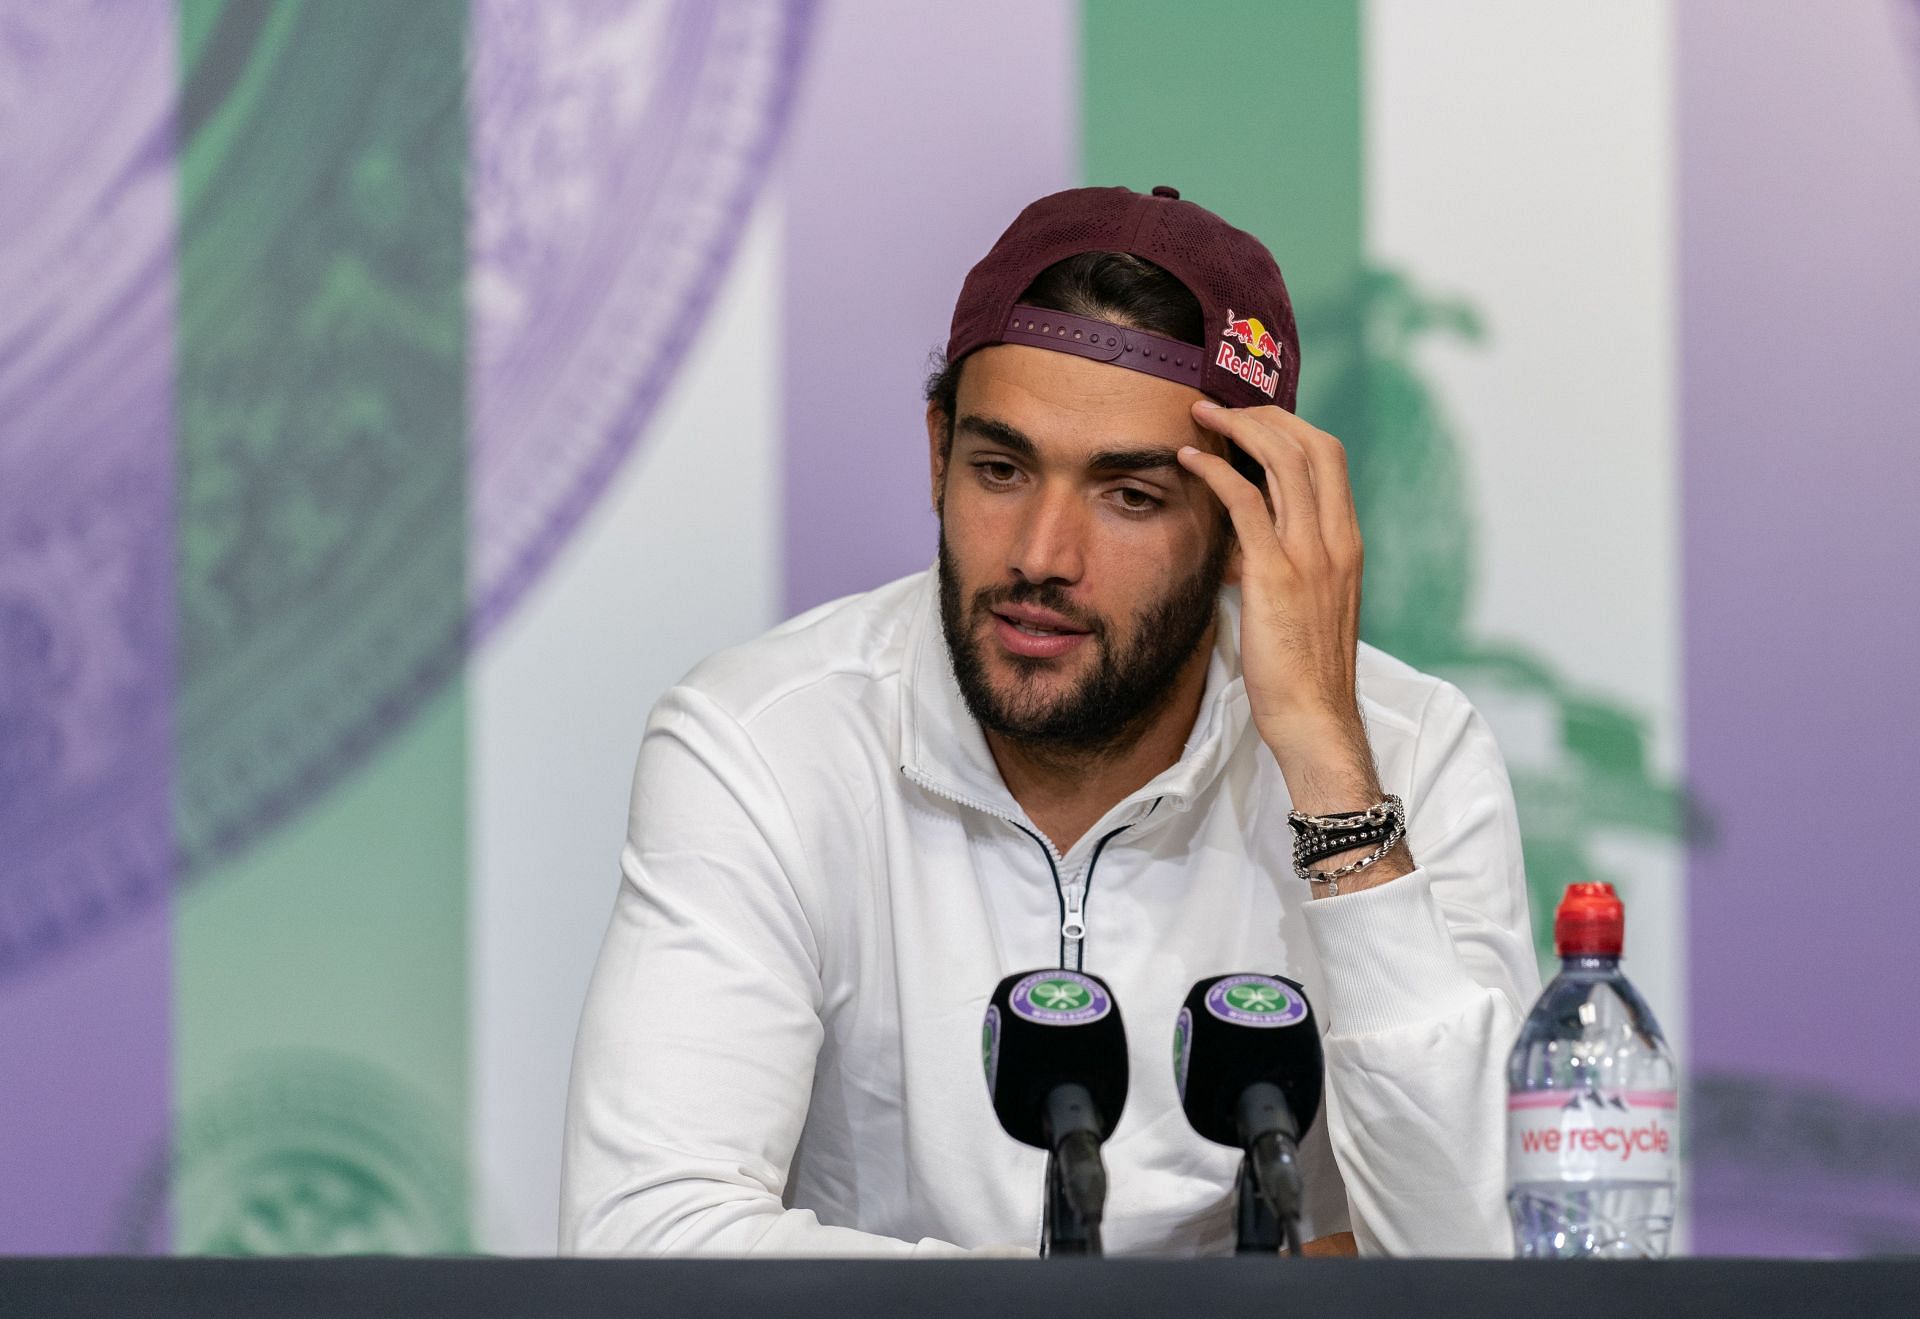 Matteo Berrettini at the 2021 Wimbledon